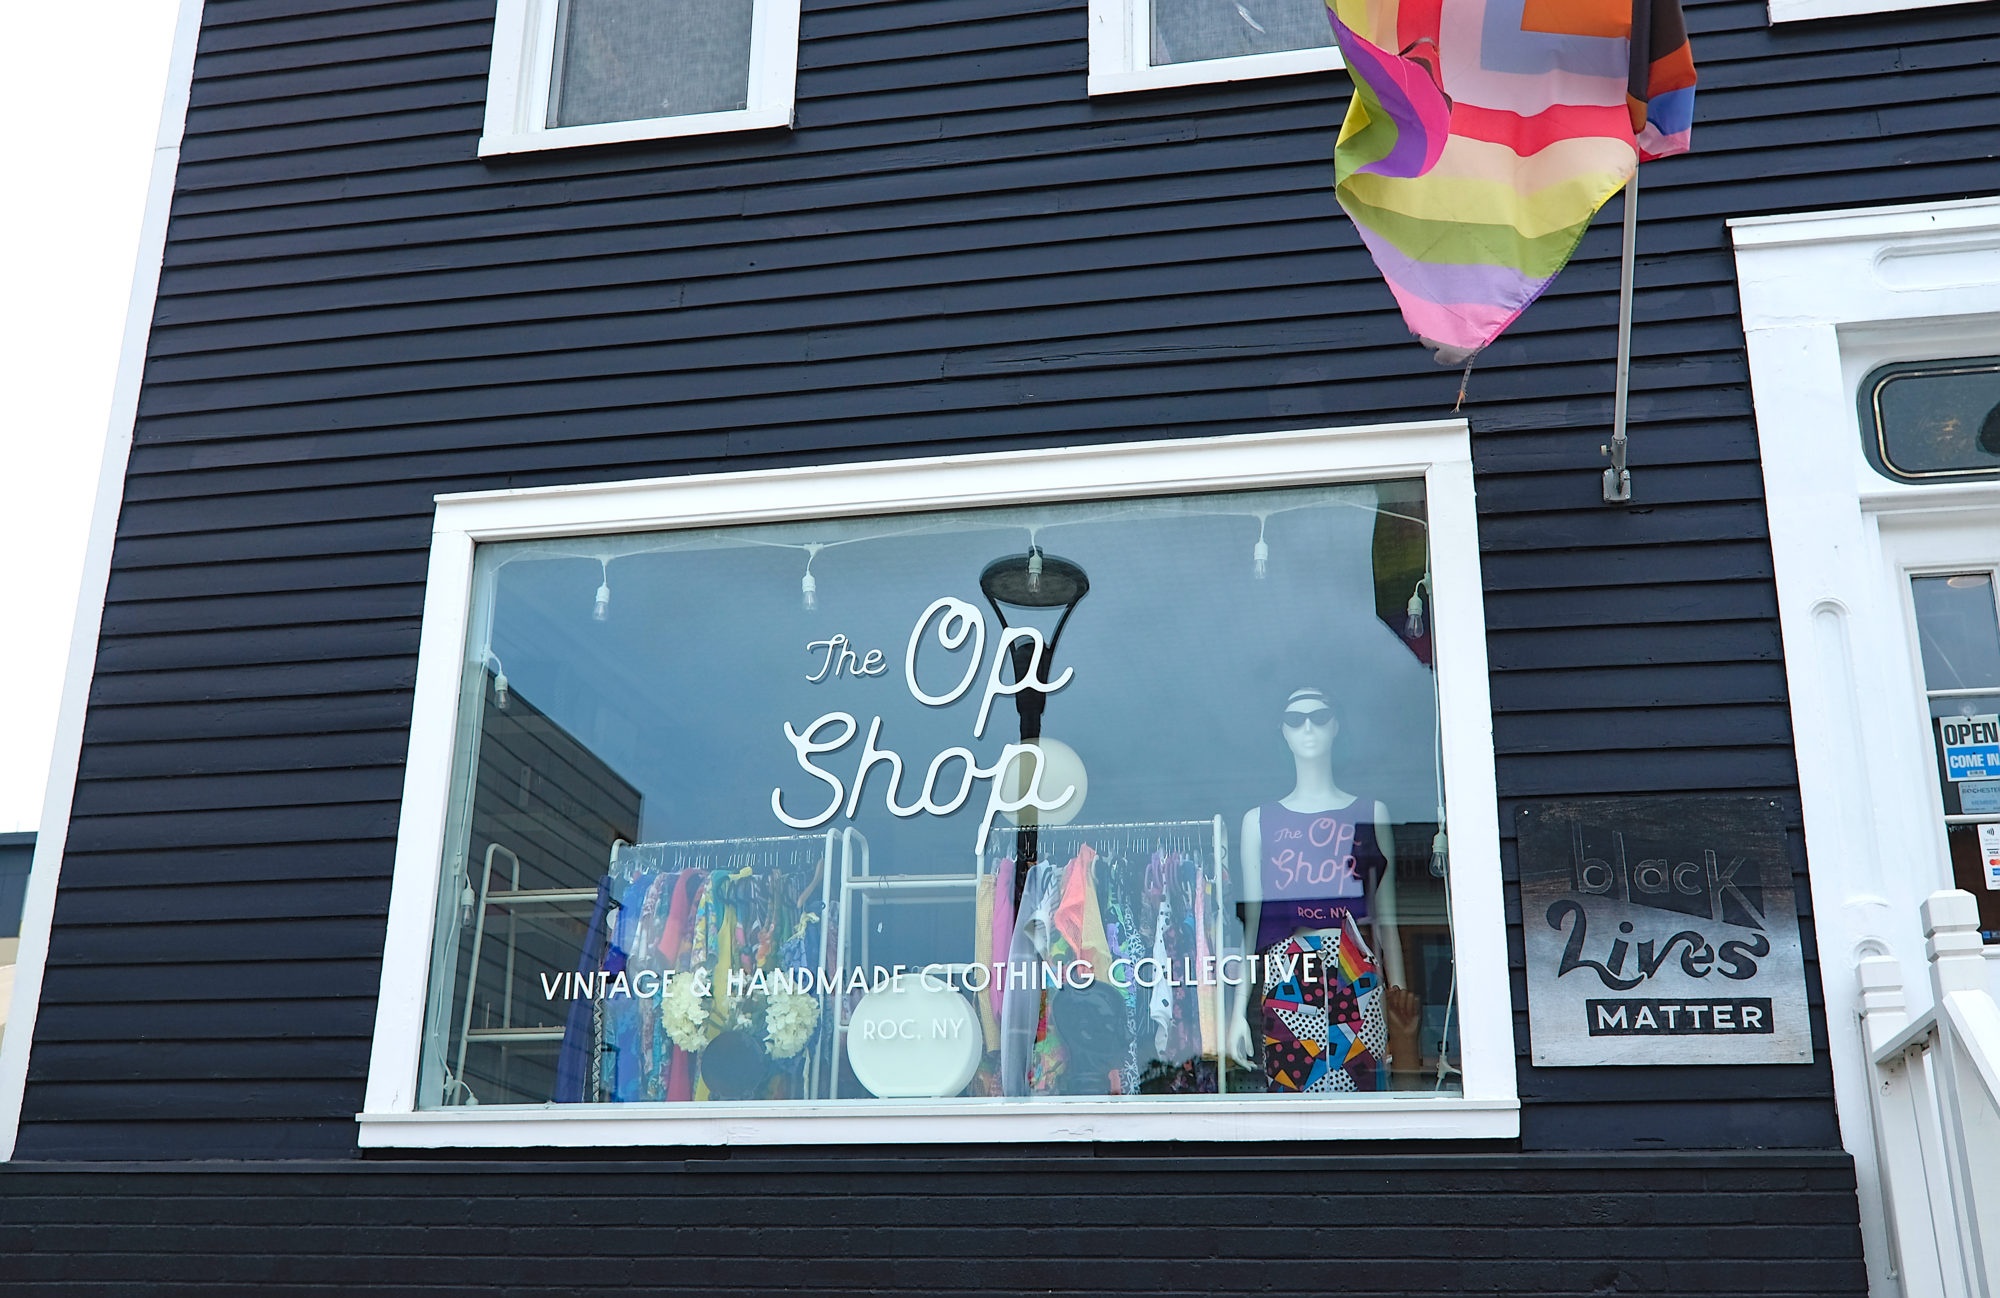 Exterior of The Op Shop